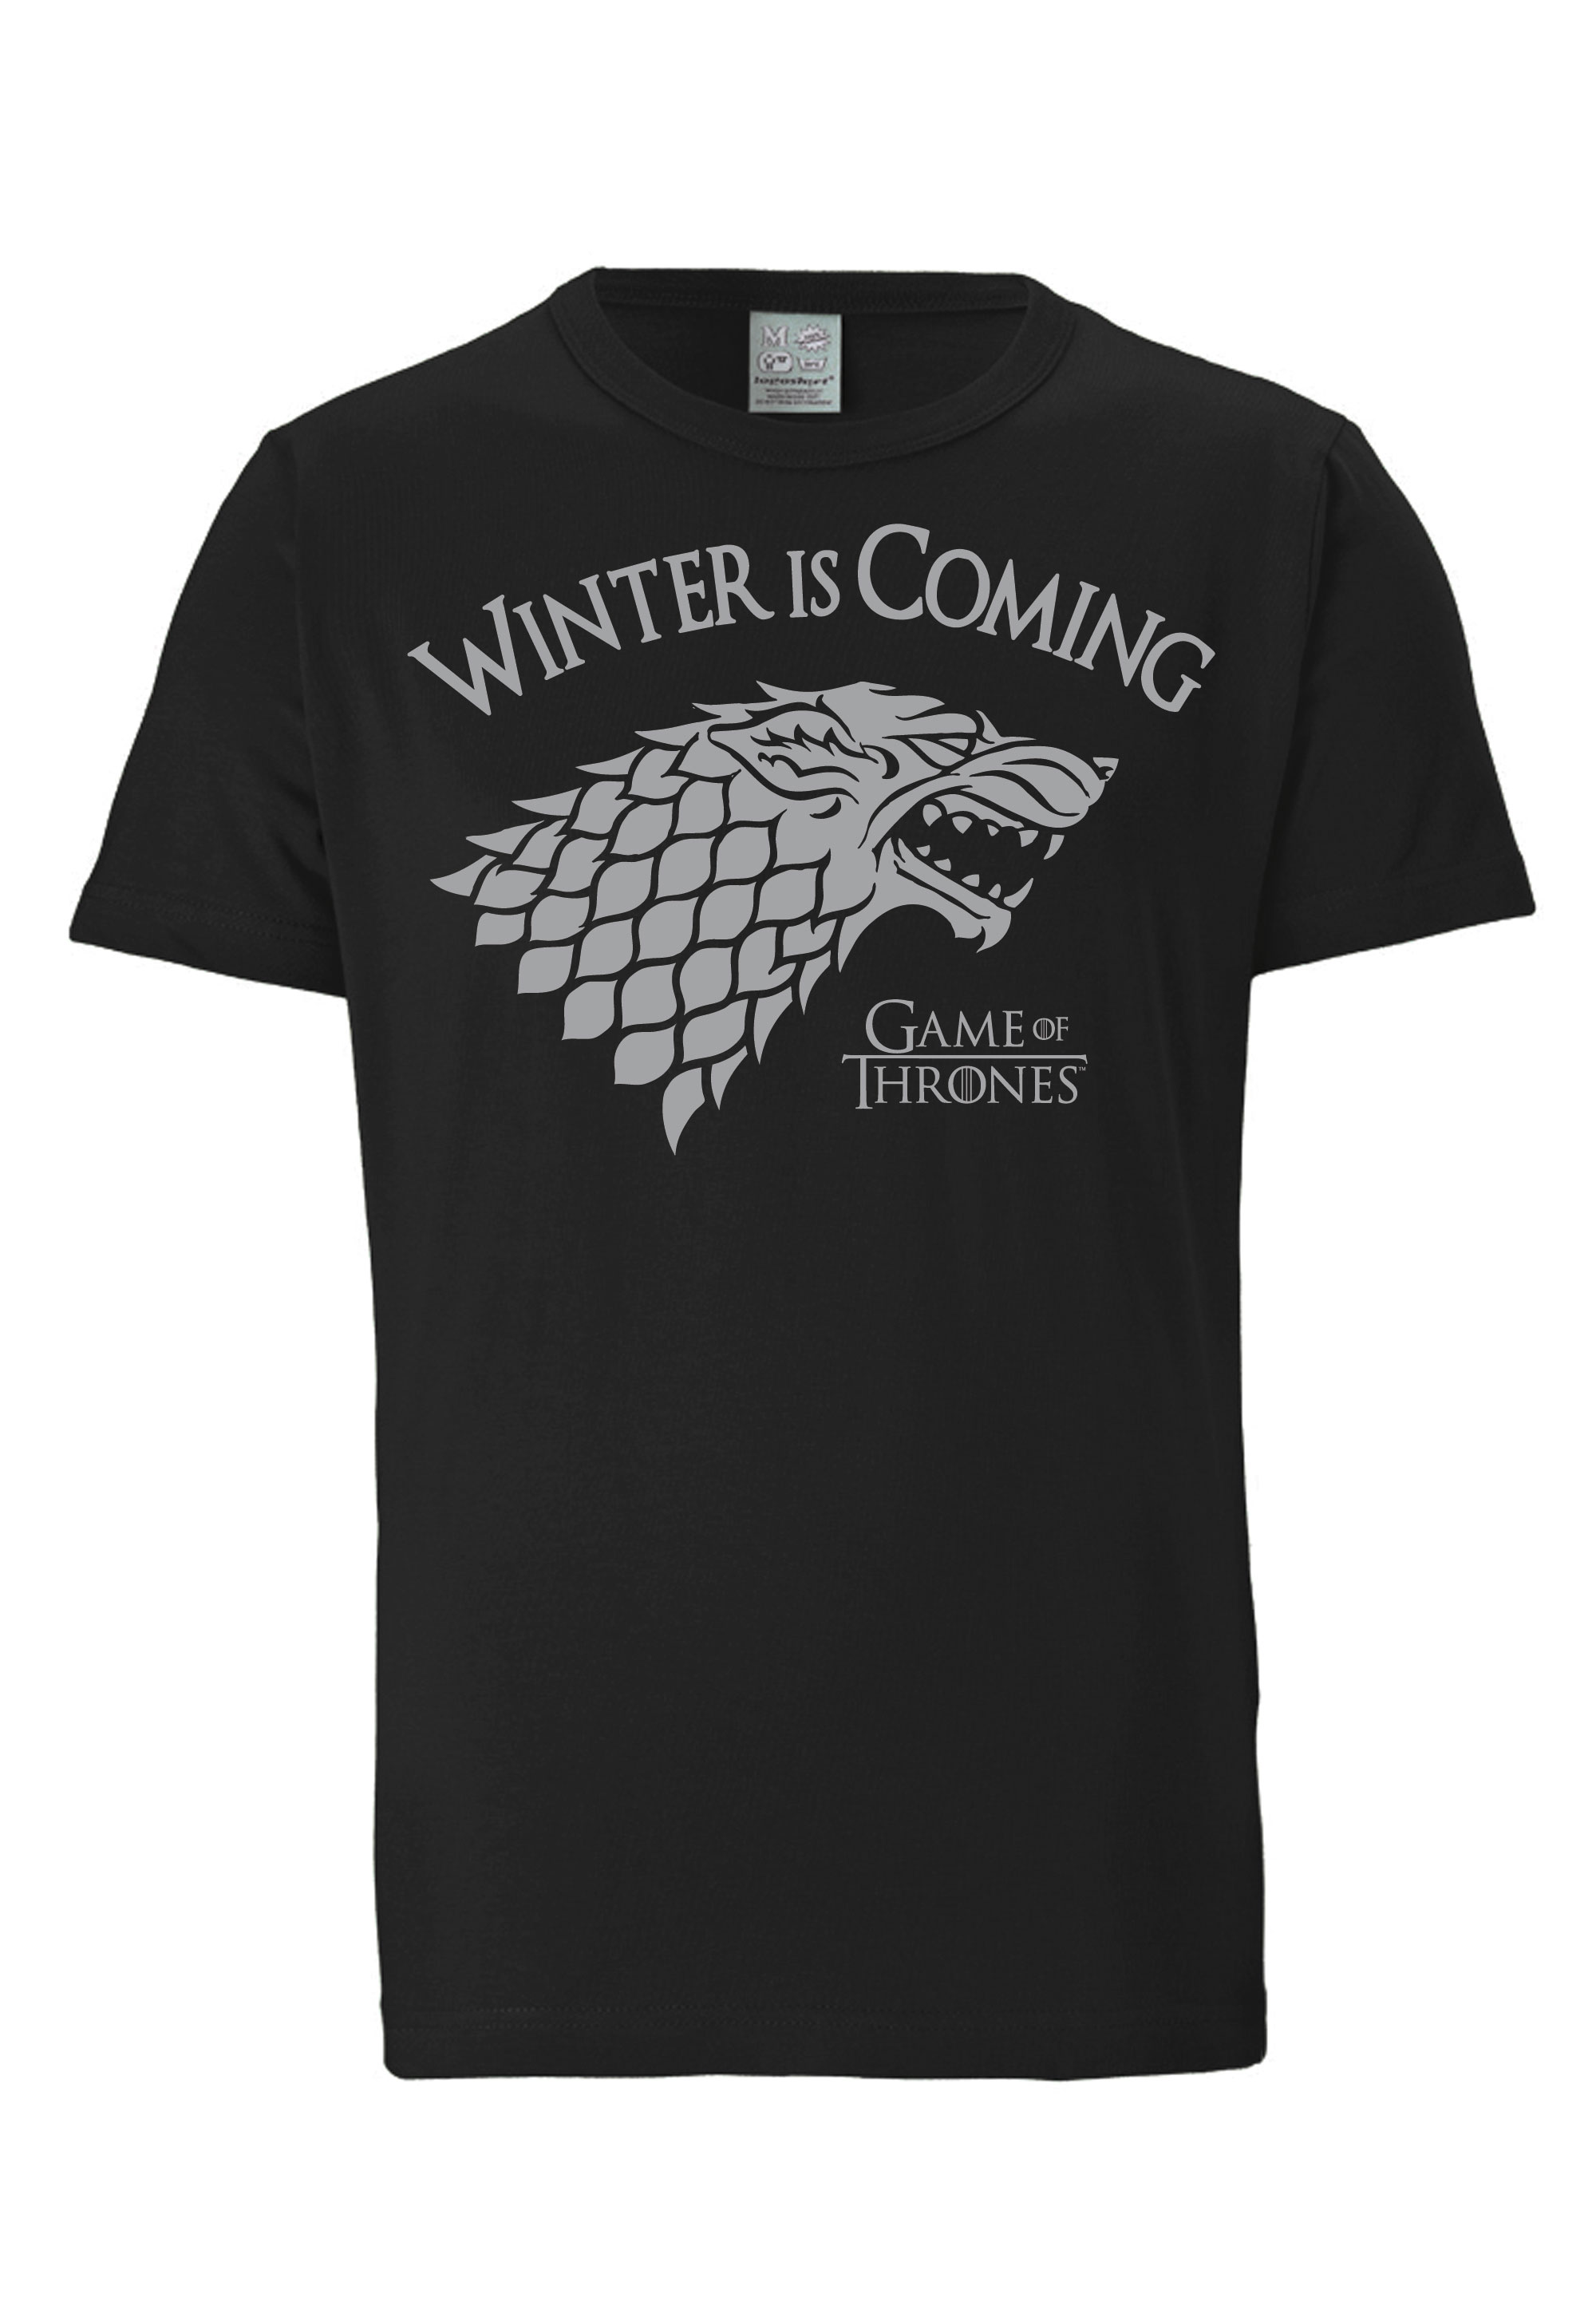 Футболка Logoshirt Game of Thrones Winter Is Coming, черный блокнот game of thrones winter is coming большой